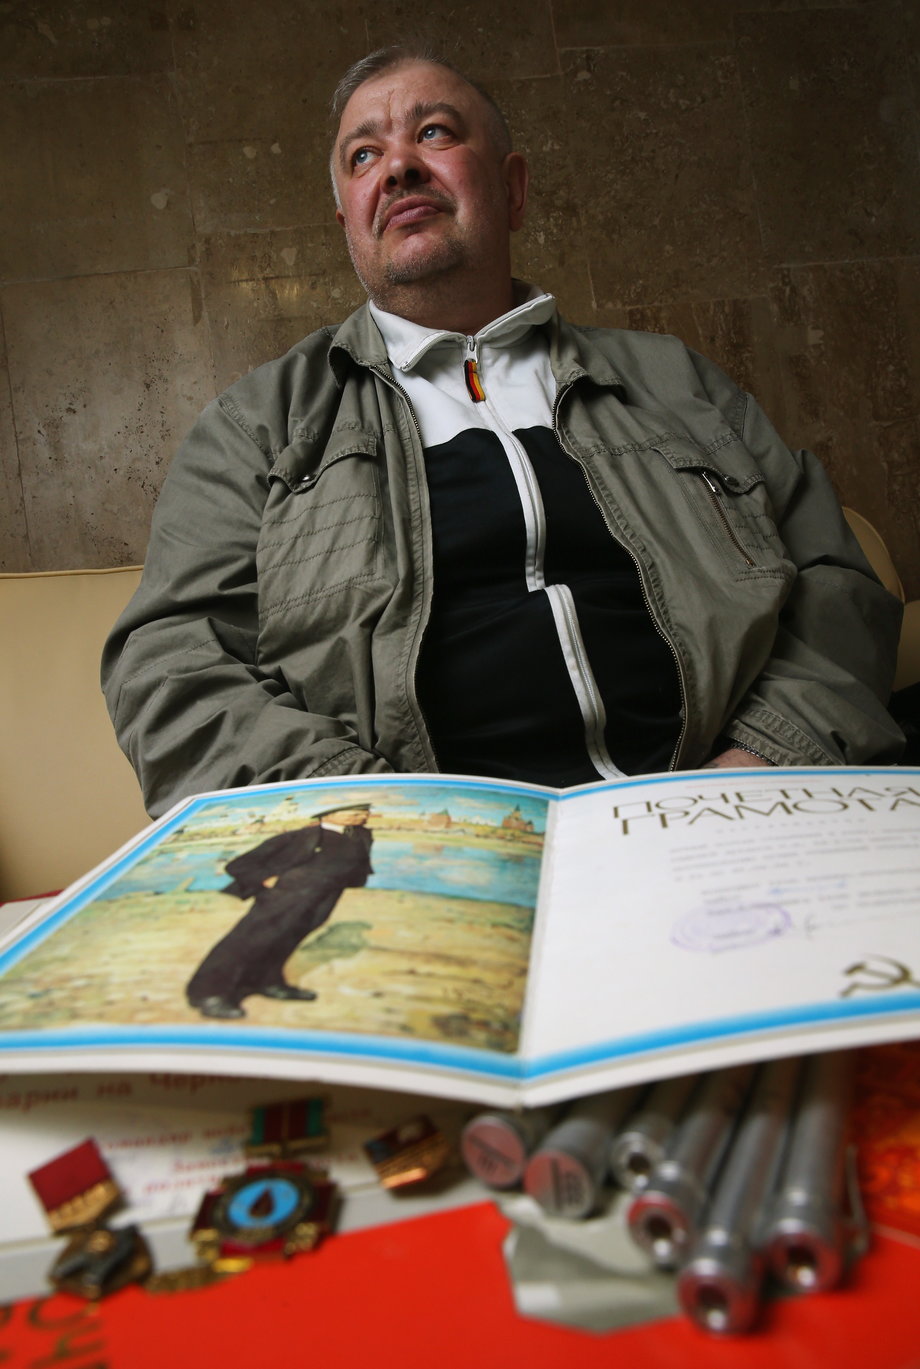 Pavel Lukashov, 49